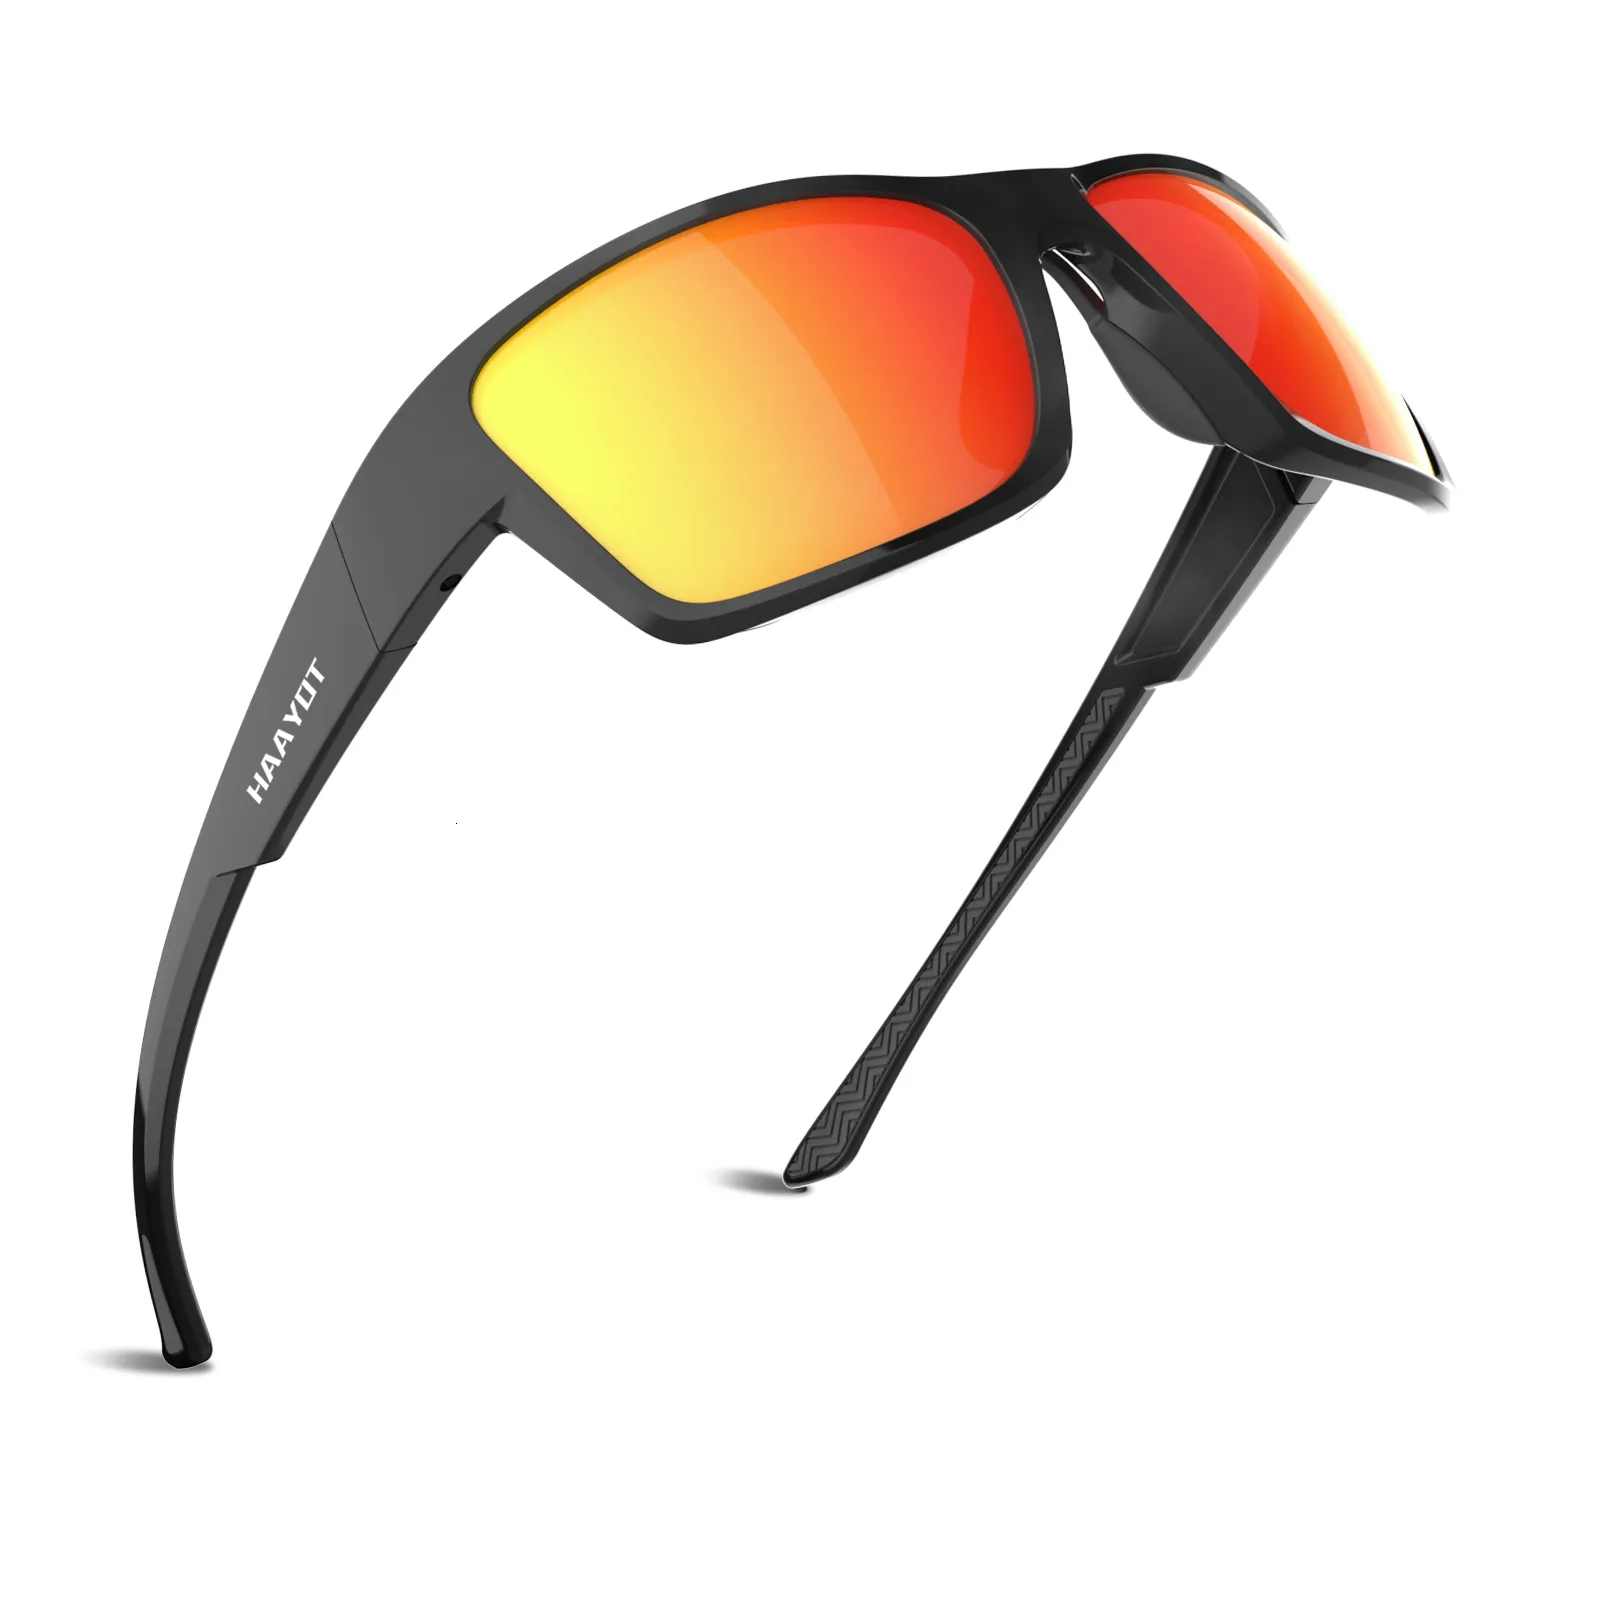 SUUKAAs Polarized Best Fishing Sunglasses For Men Ideal For